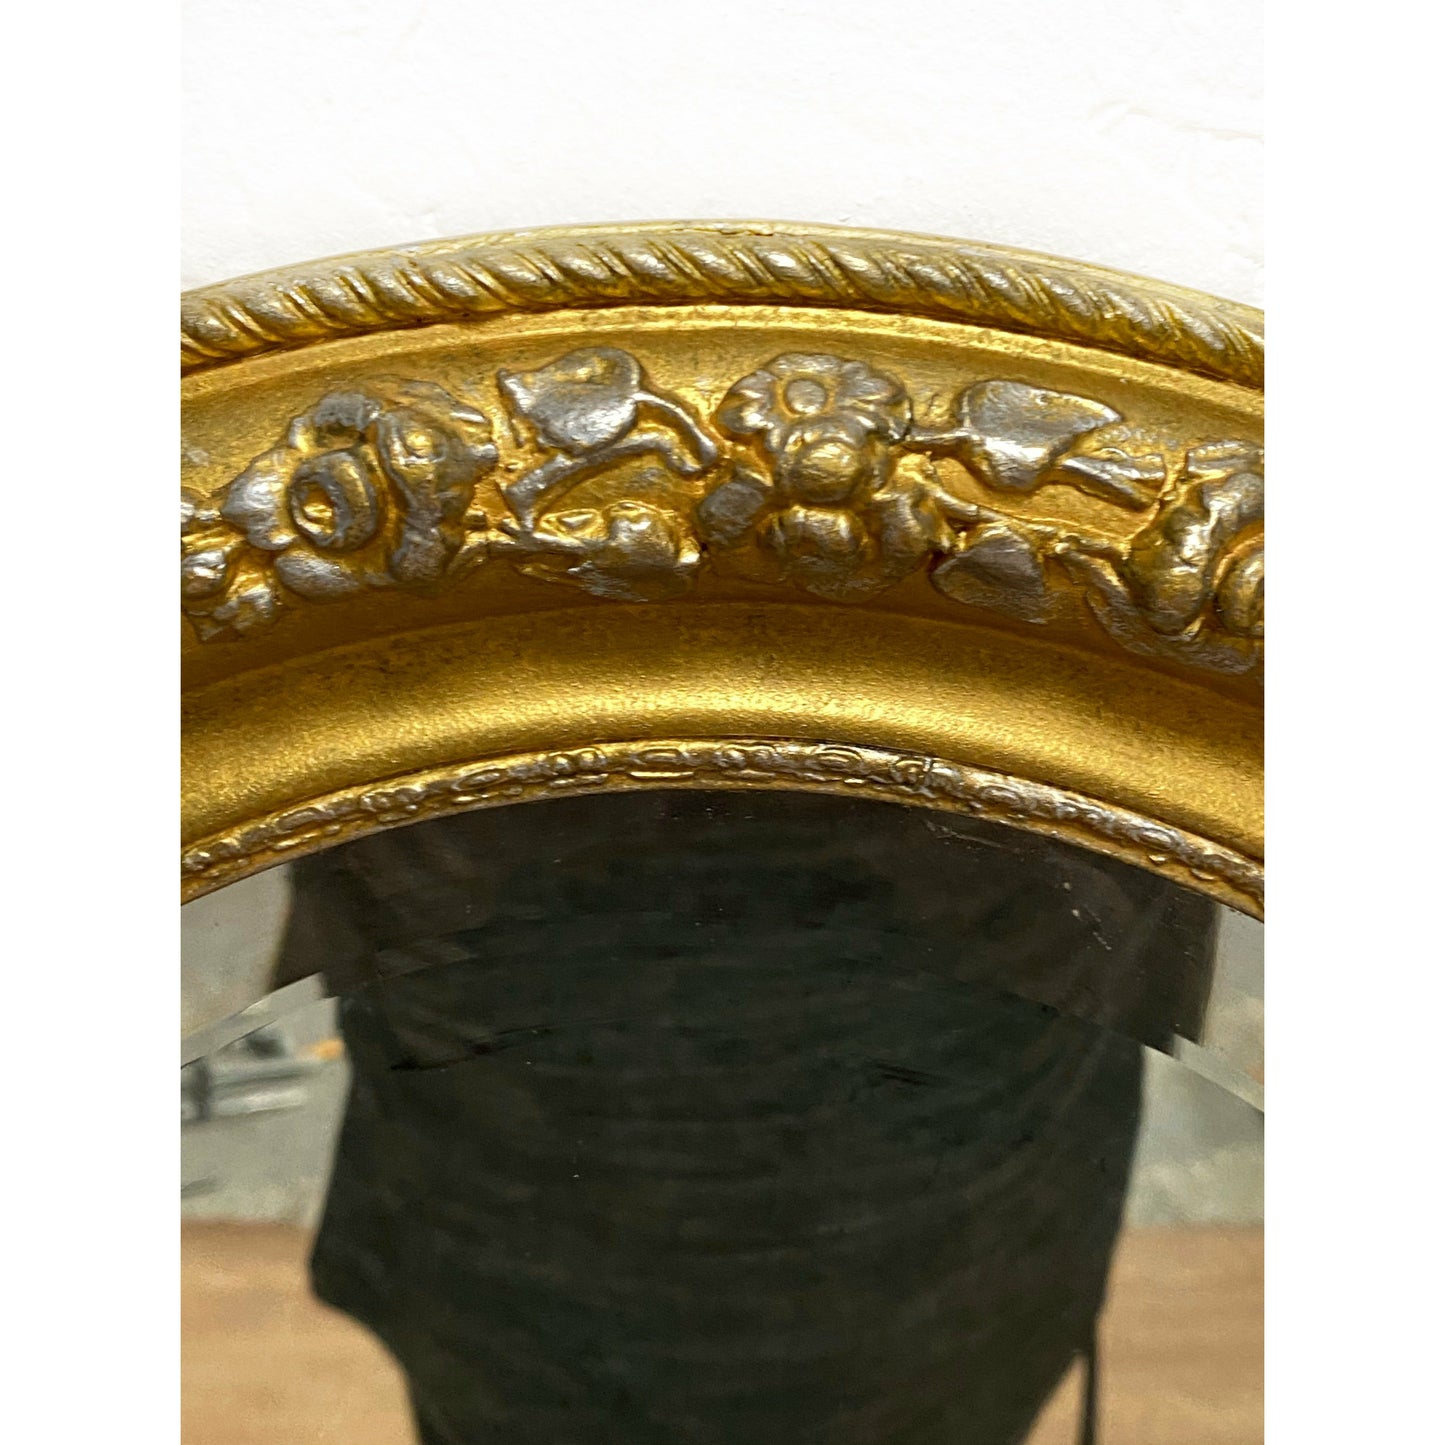 Antique Victorian Oval Bevel Edge Mirror Gold Finish - Unique Home Pieces